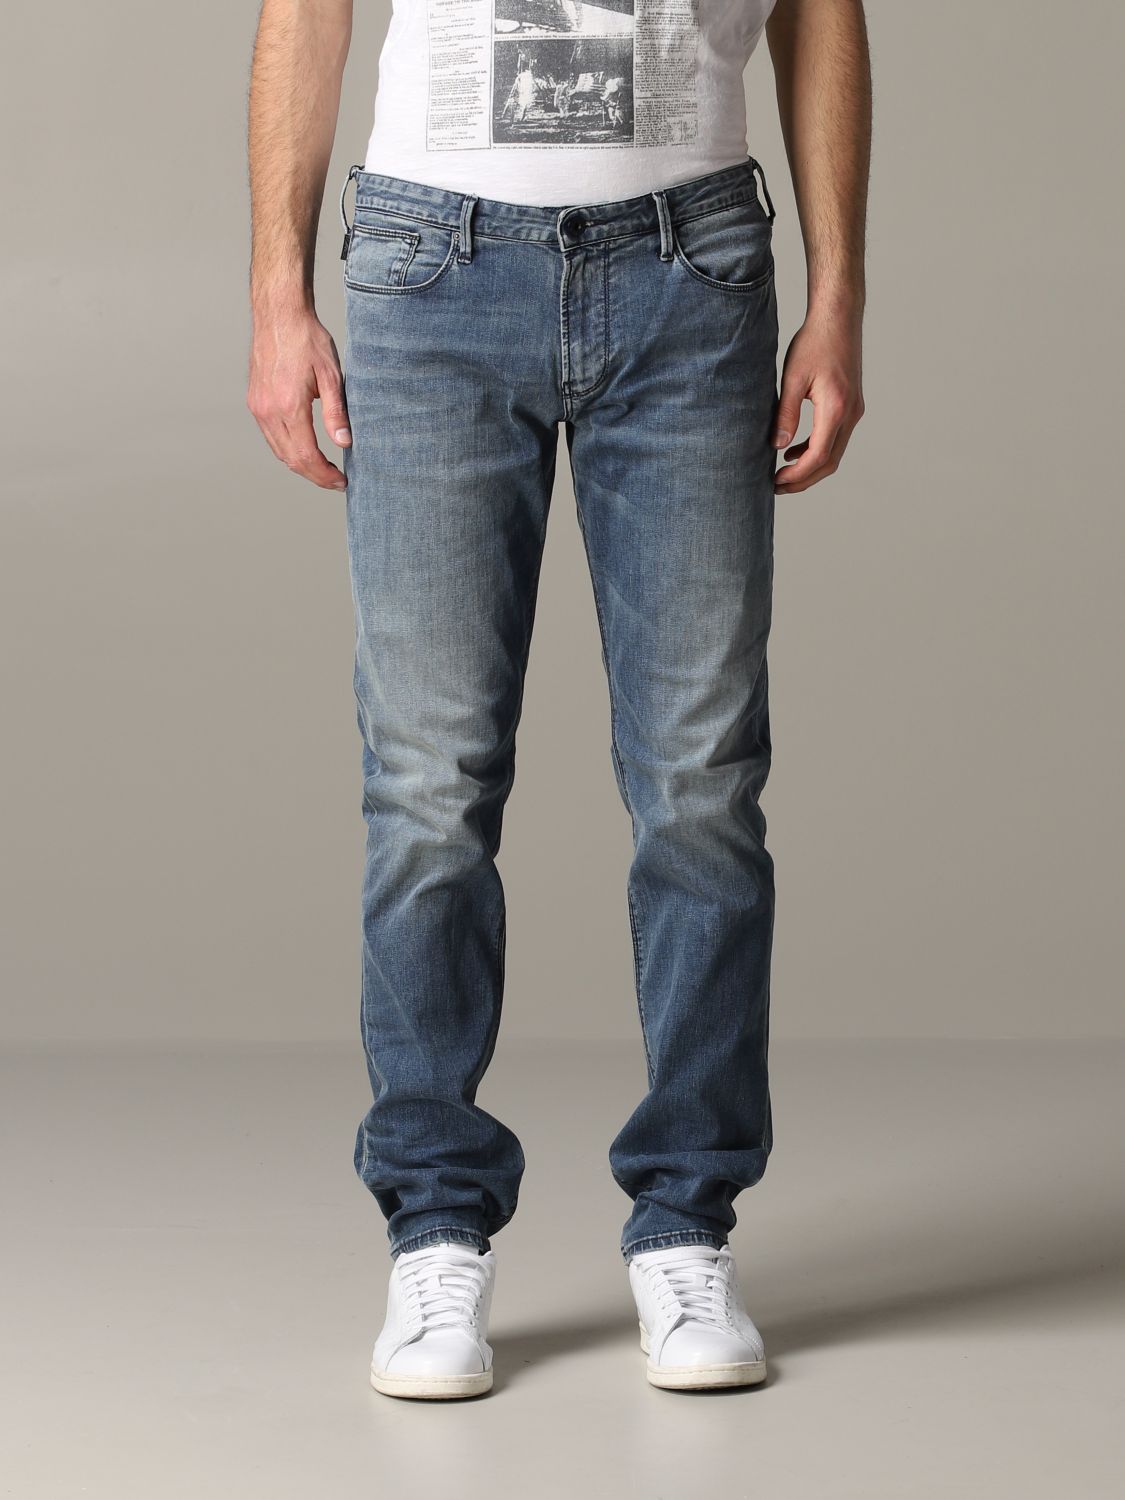 emporio jeans price